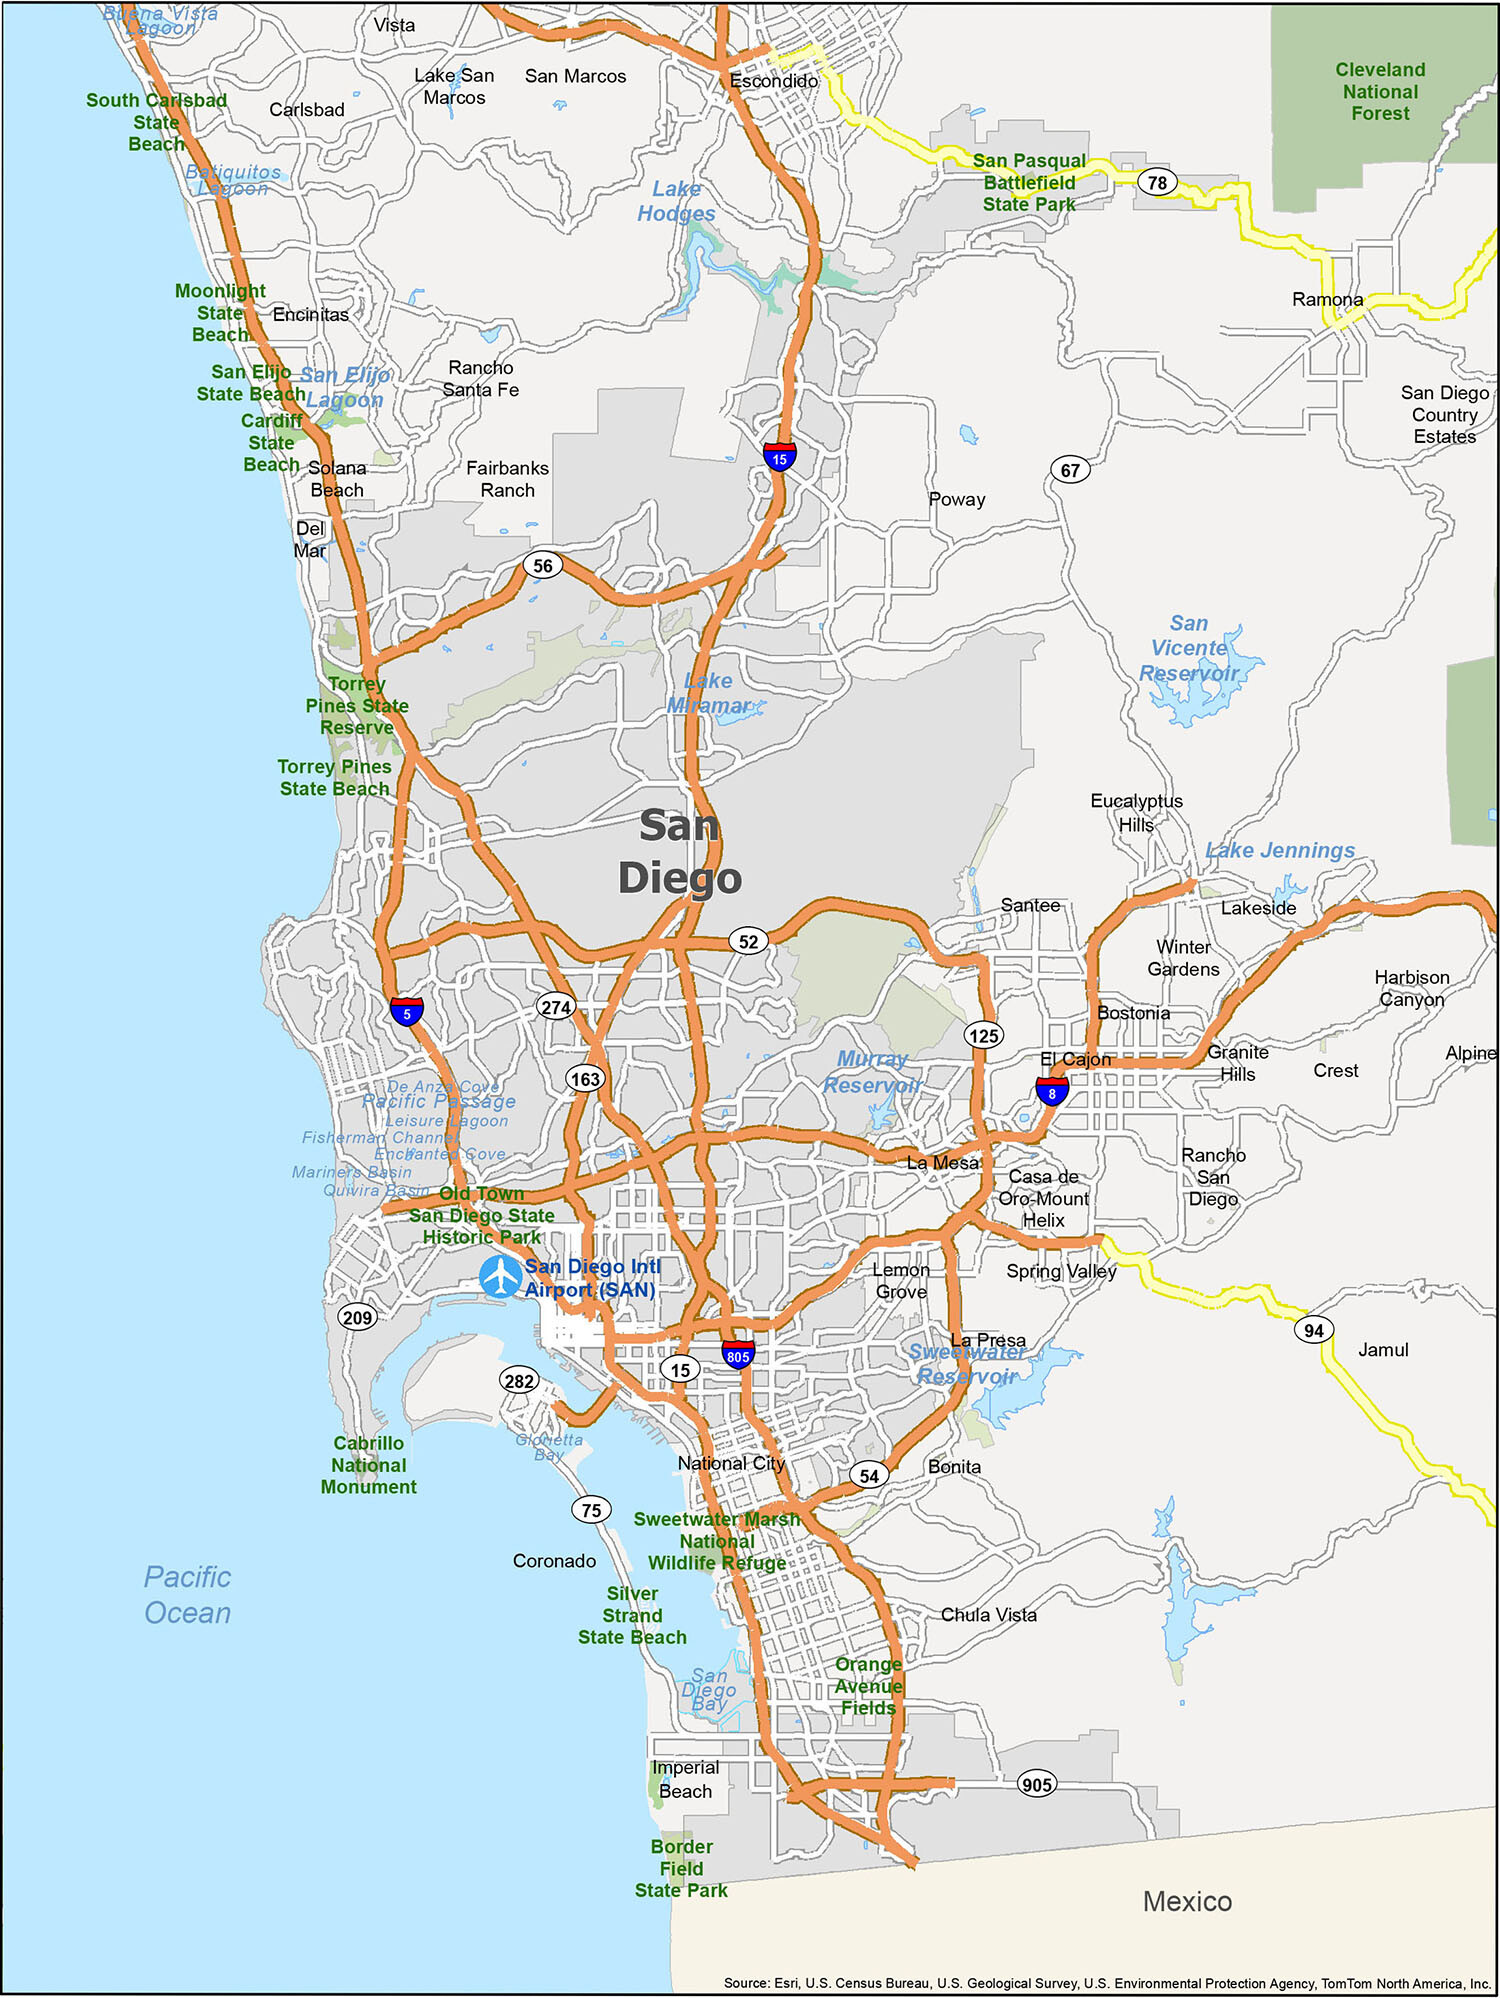 San Diego On Map Of California - Sammy Coraline